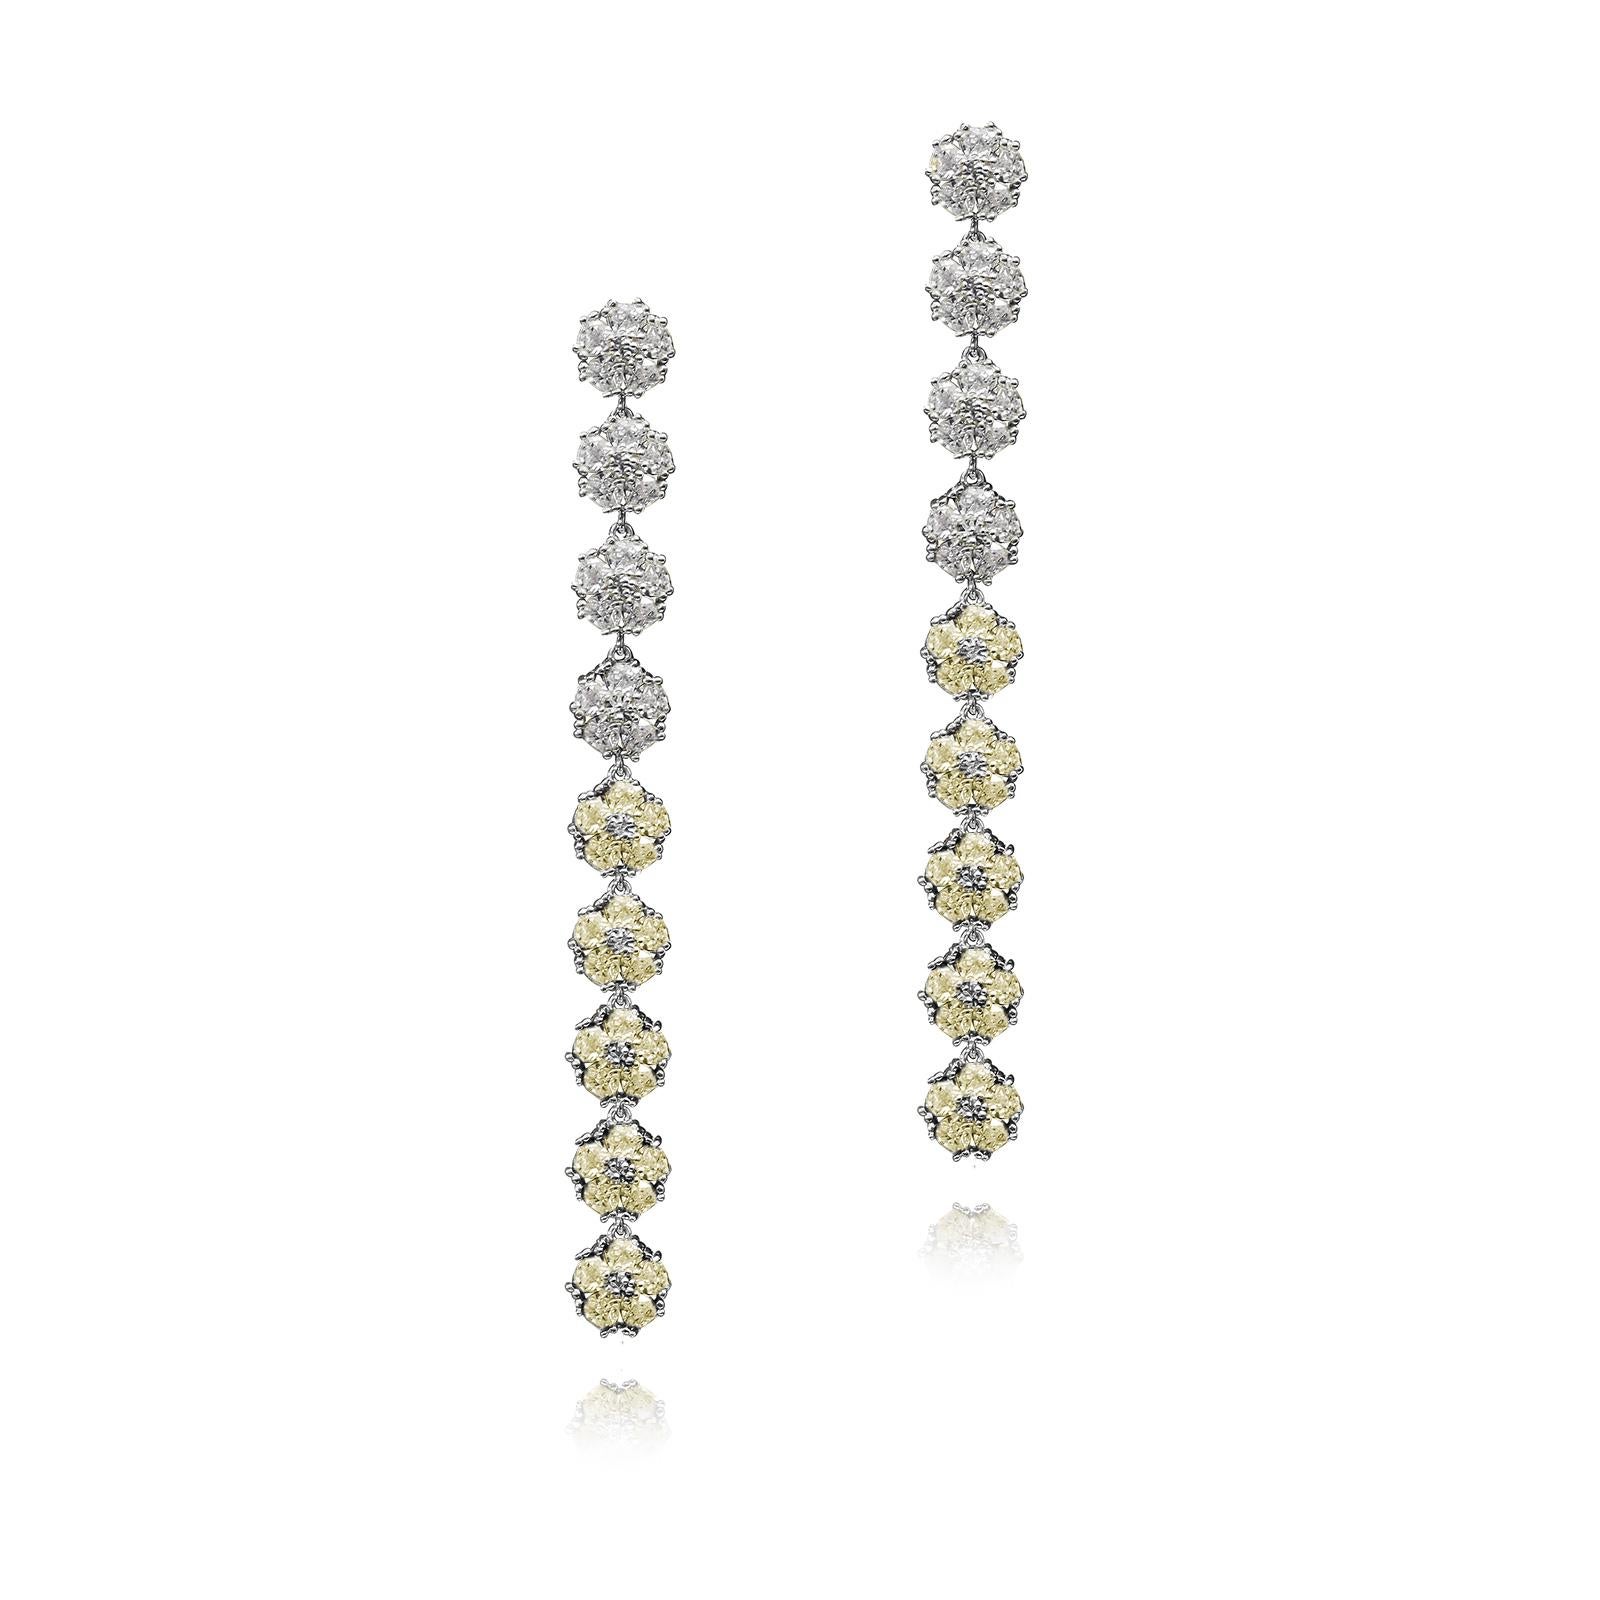 Modern Blossom Gentile Ombre Chandelier Earrings, White, Gray and Black Gemstones For Sale